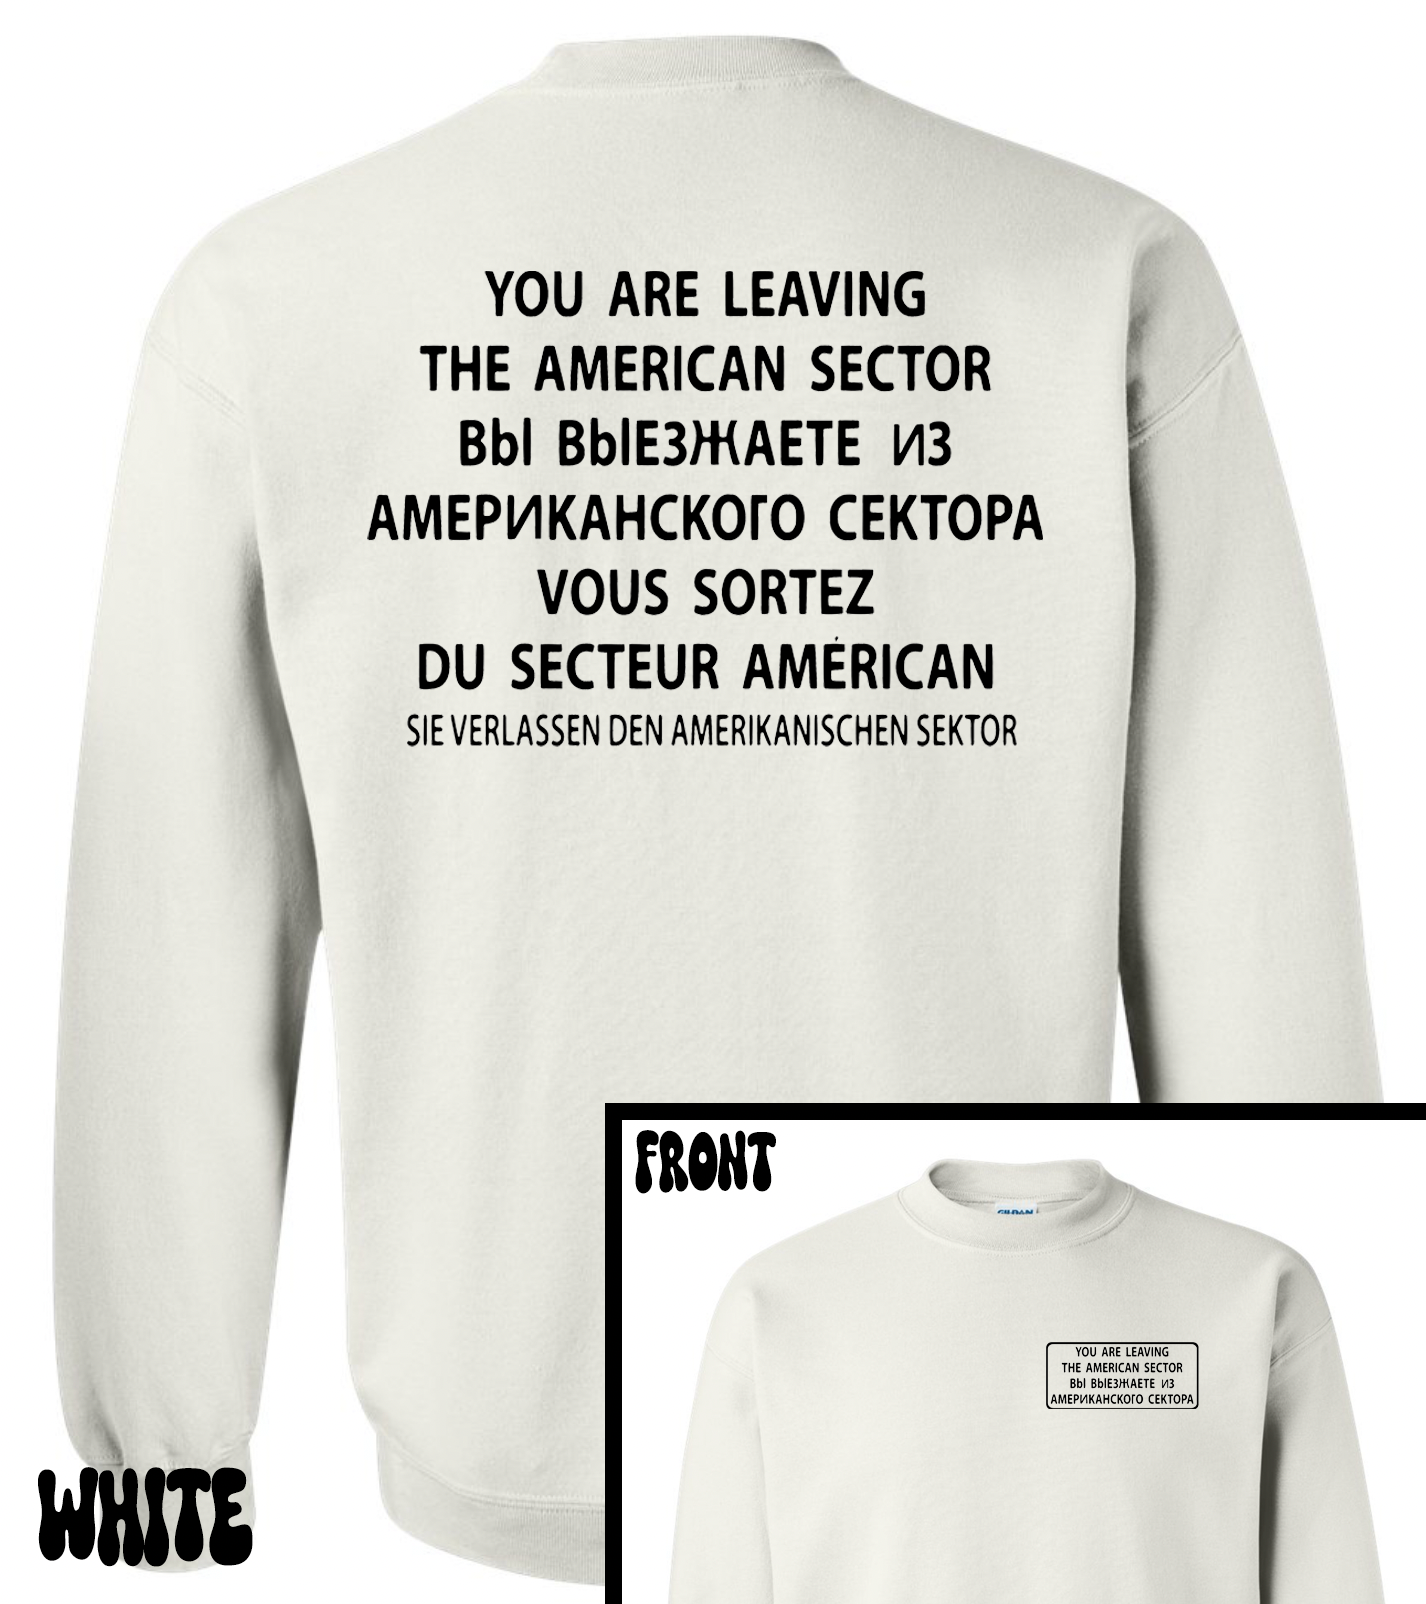 American Sector Tee and Sweatshirt Berlin